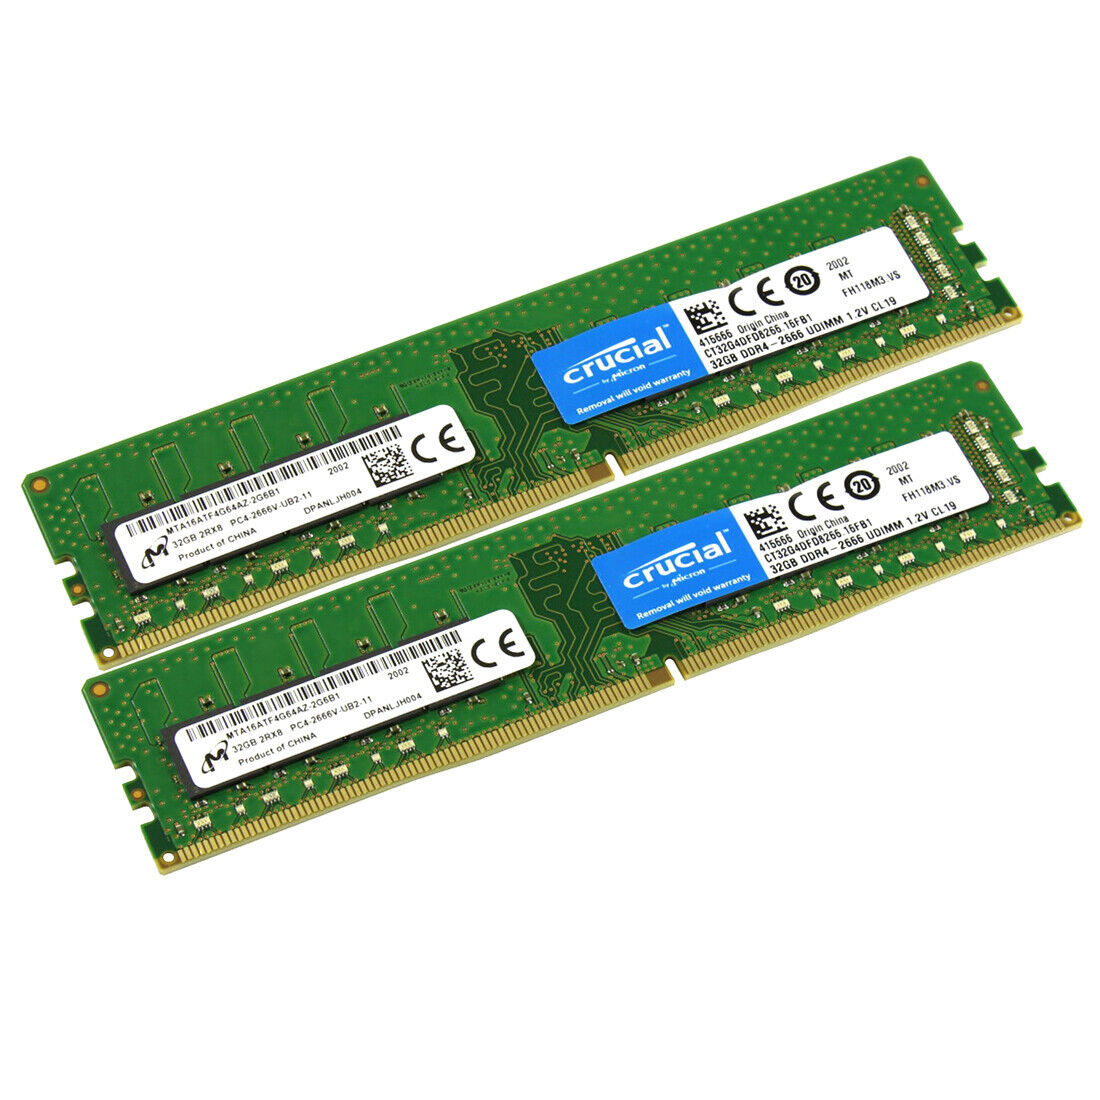 Crucial Kit 64GB (2x 32GB) 2666MHz DDR4 UDIMM RAM PC4-21300 2Rx8 Desktop Memory